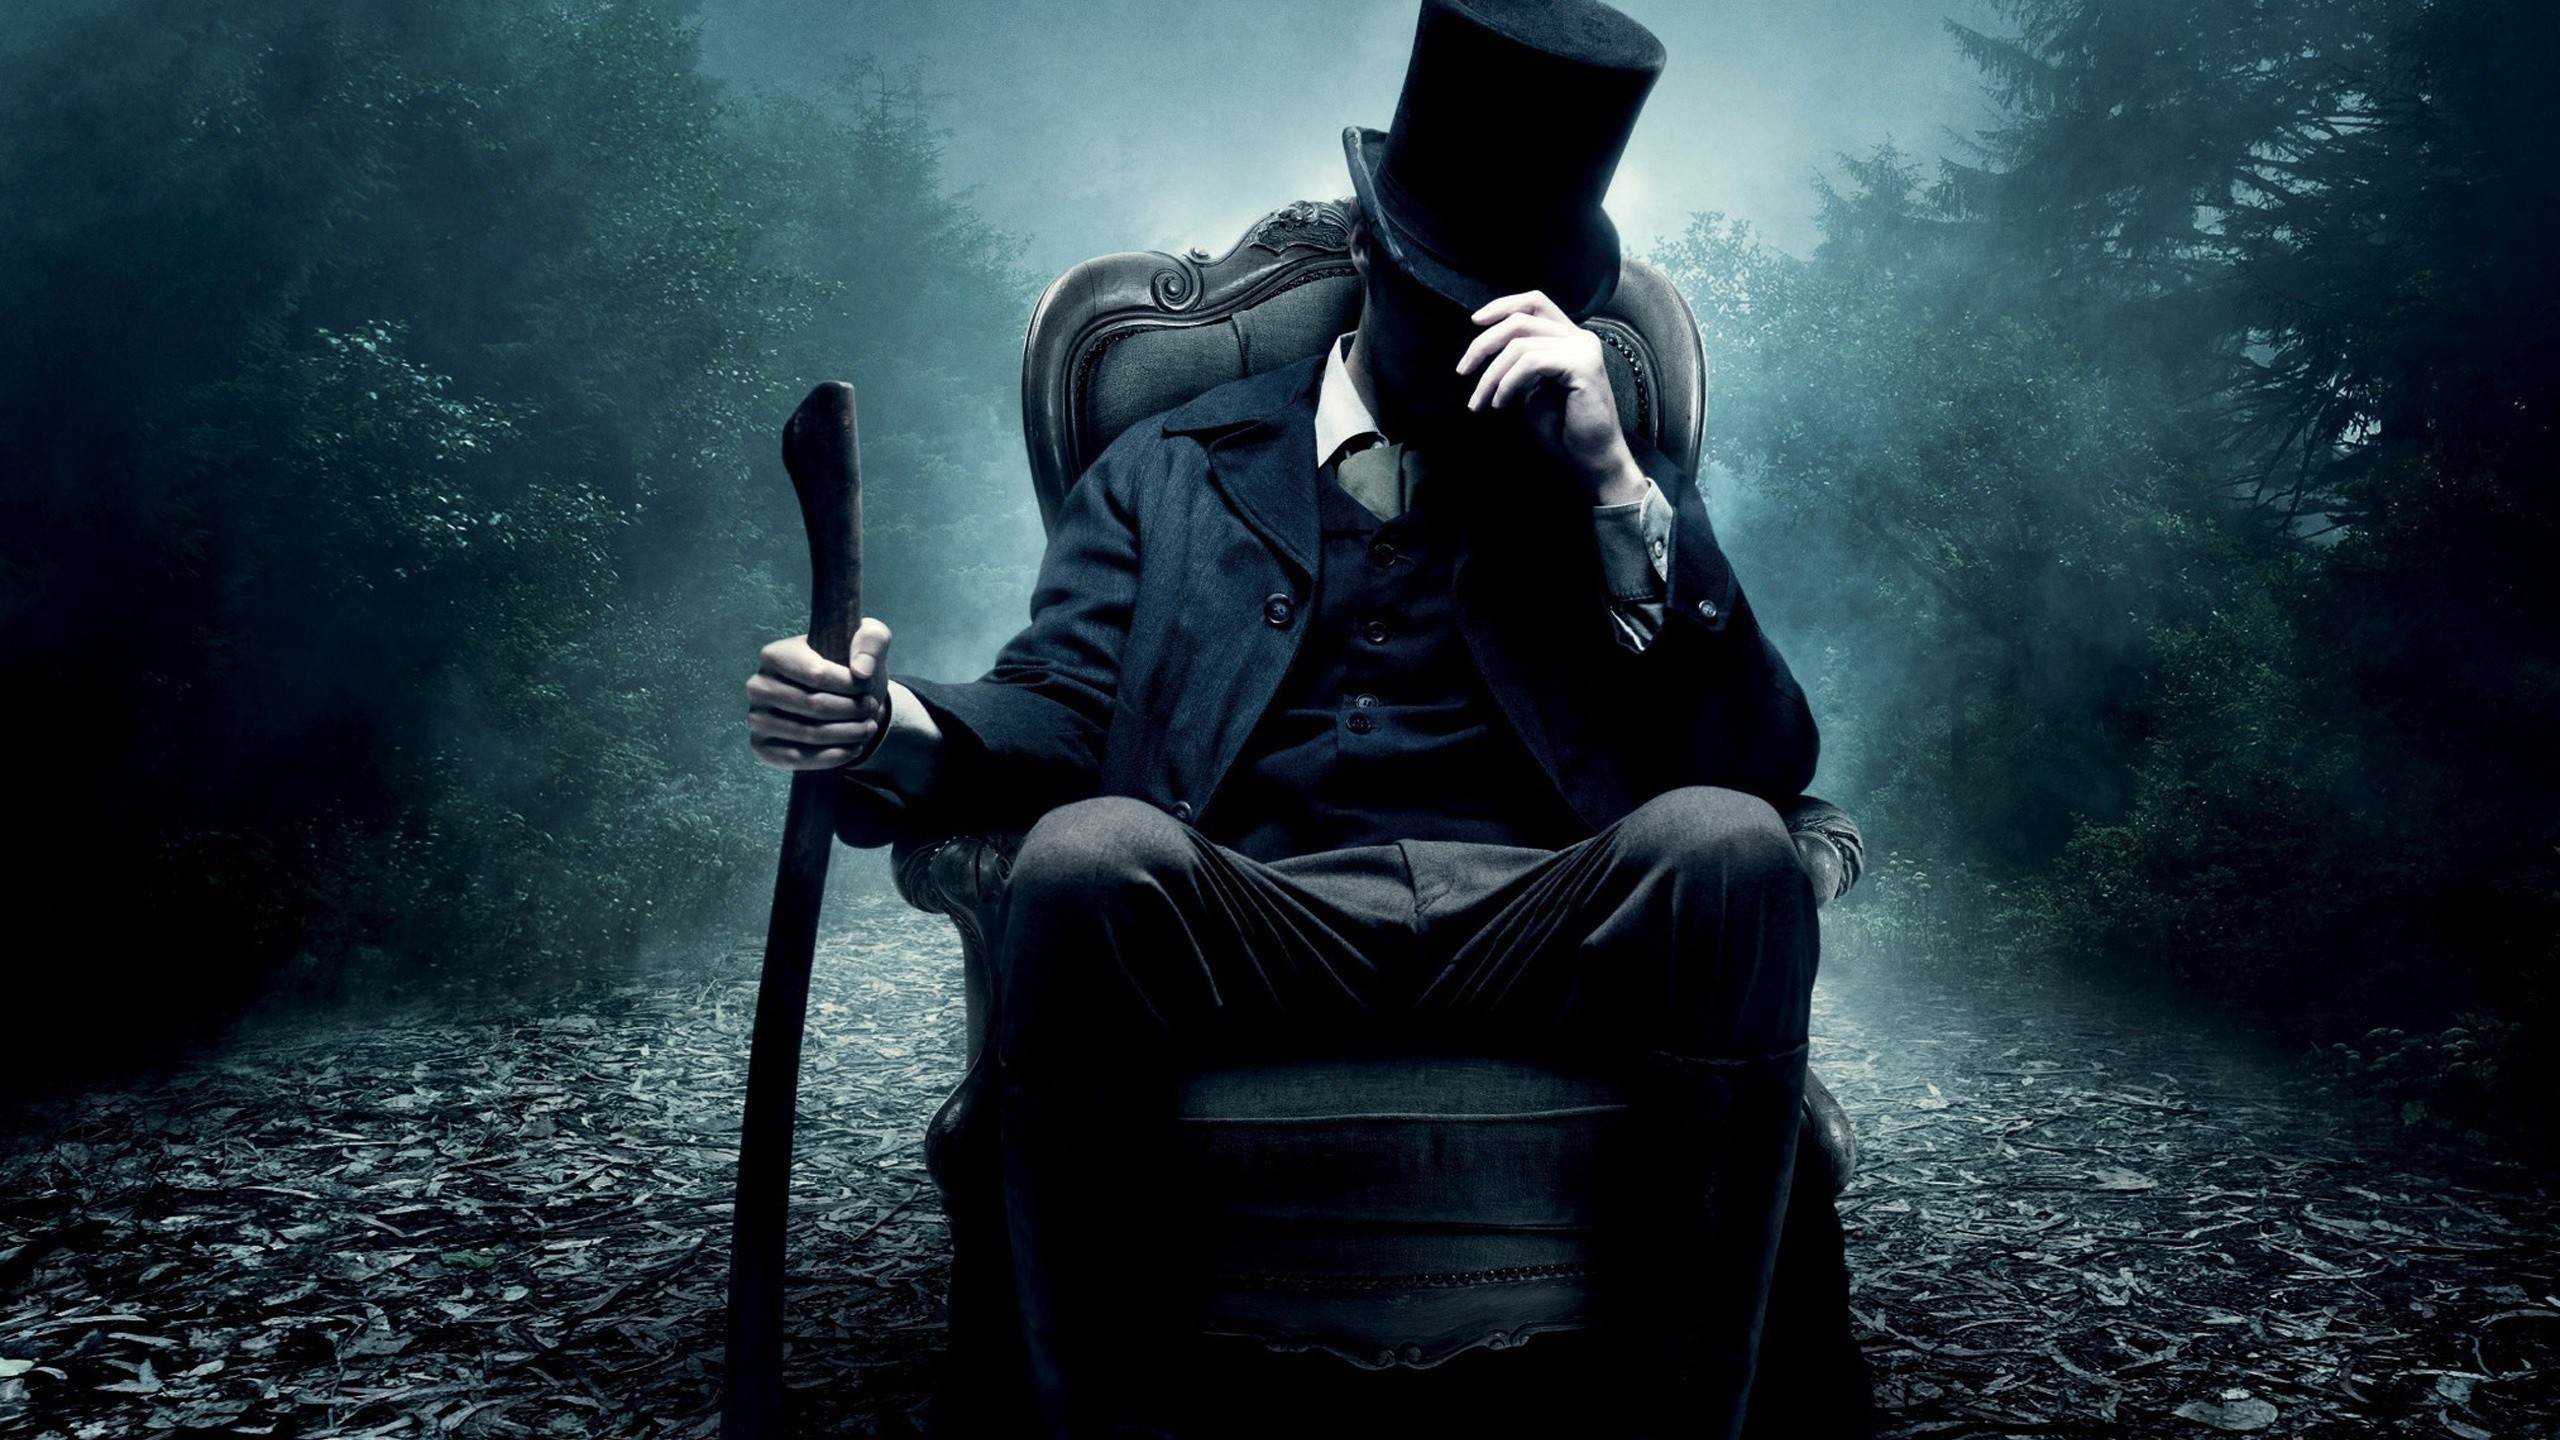 General 2560x1440 Abraham Lincoln: Vampire Hunter movies 2012 (Year)